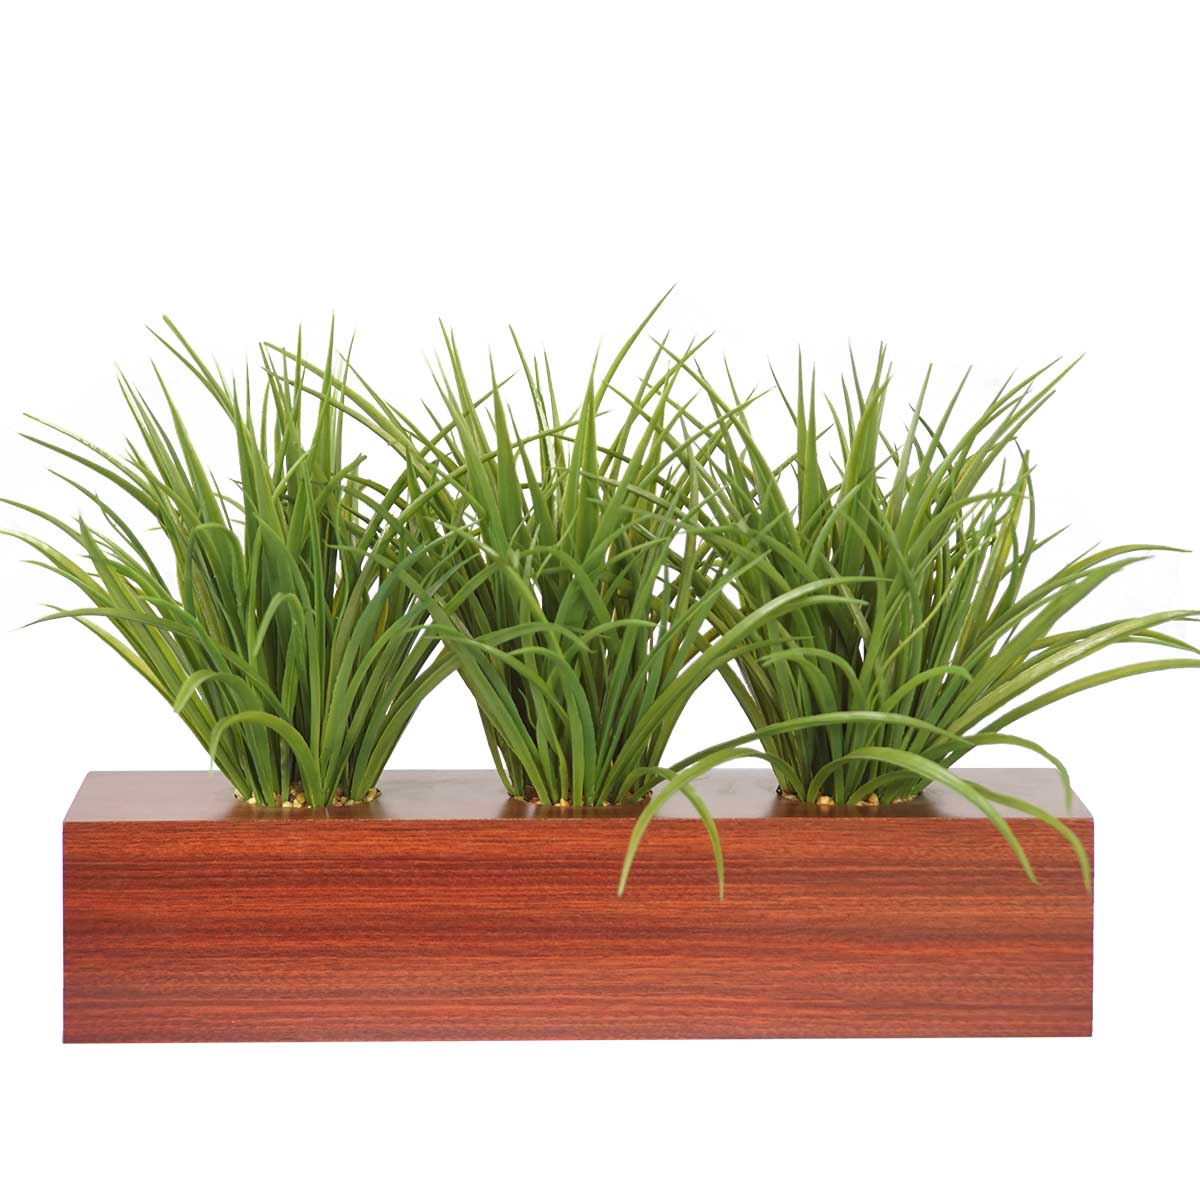 Vha102475 Plastic Grass In Wooden Pot